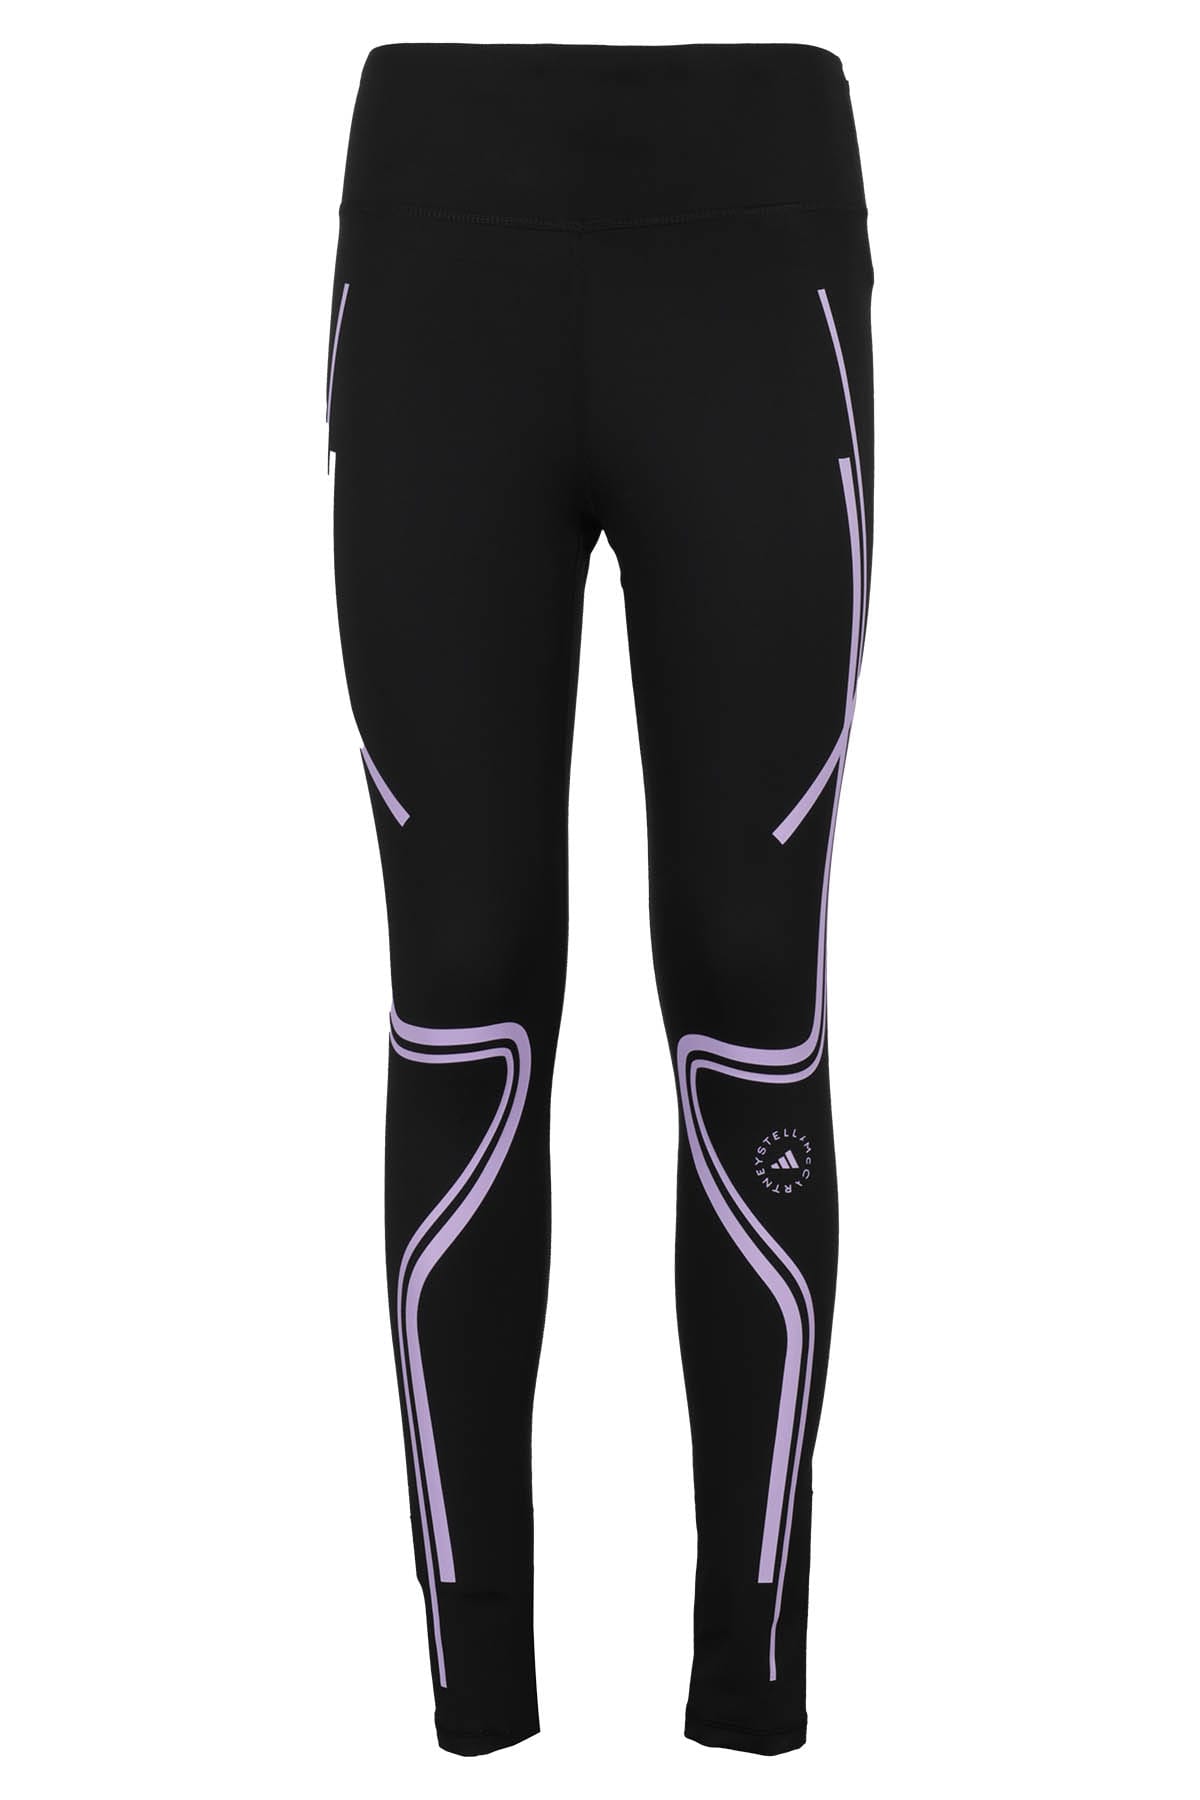 Adidas by Stella McCartney Tpa Tight - 0Black Purple Glow - female - Size: Extra Small